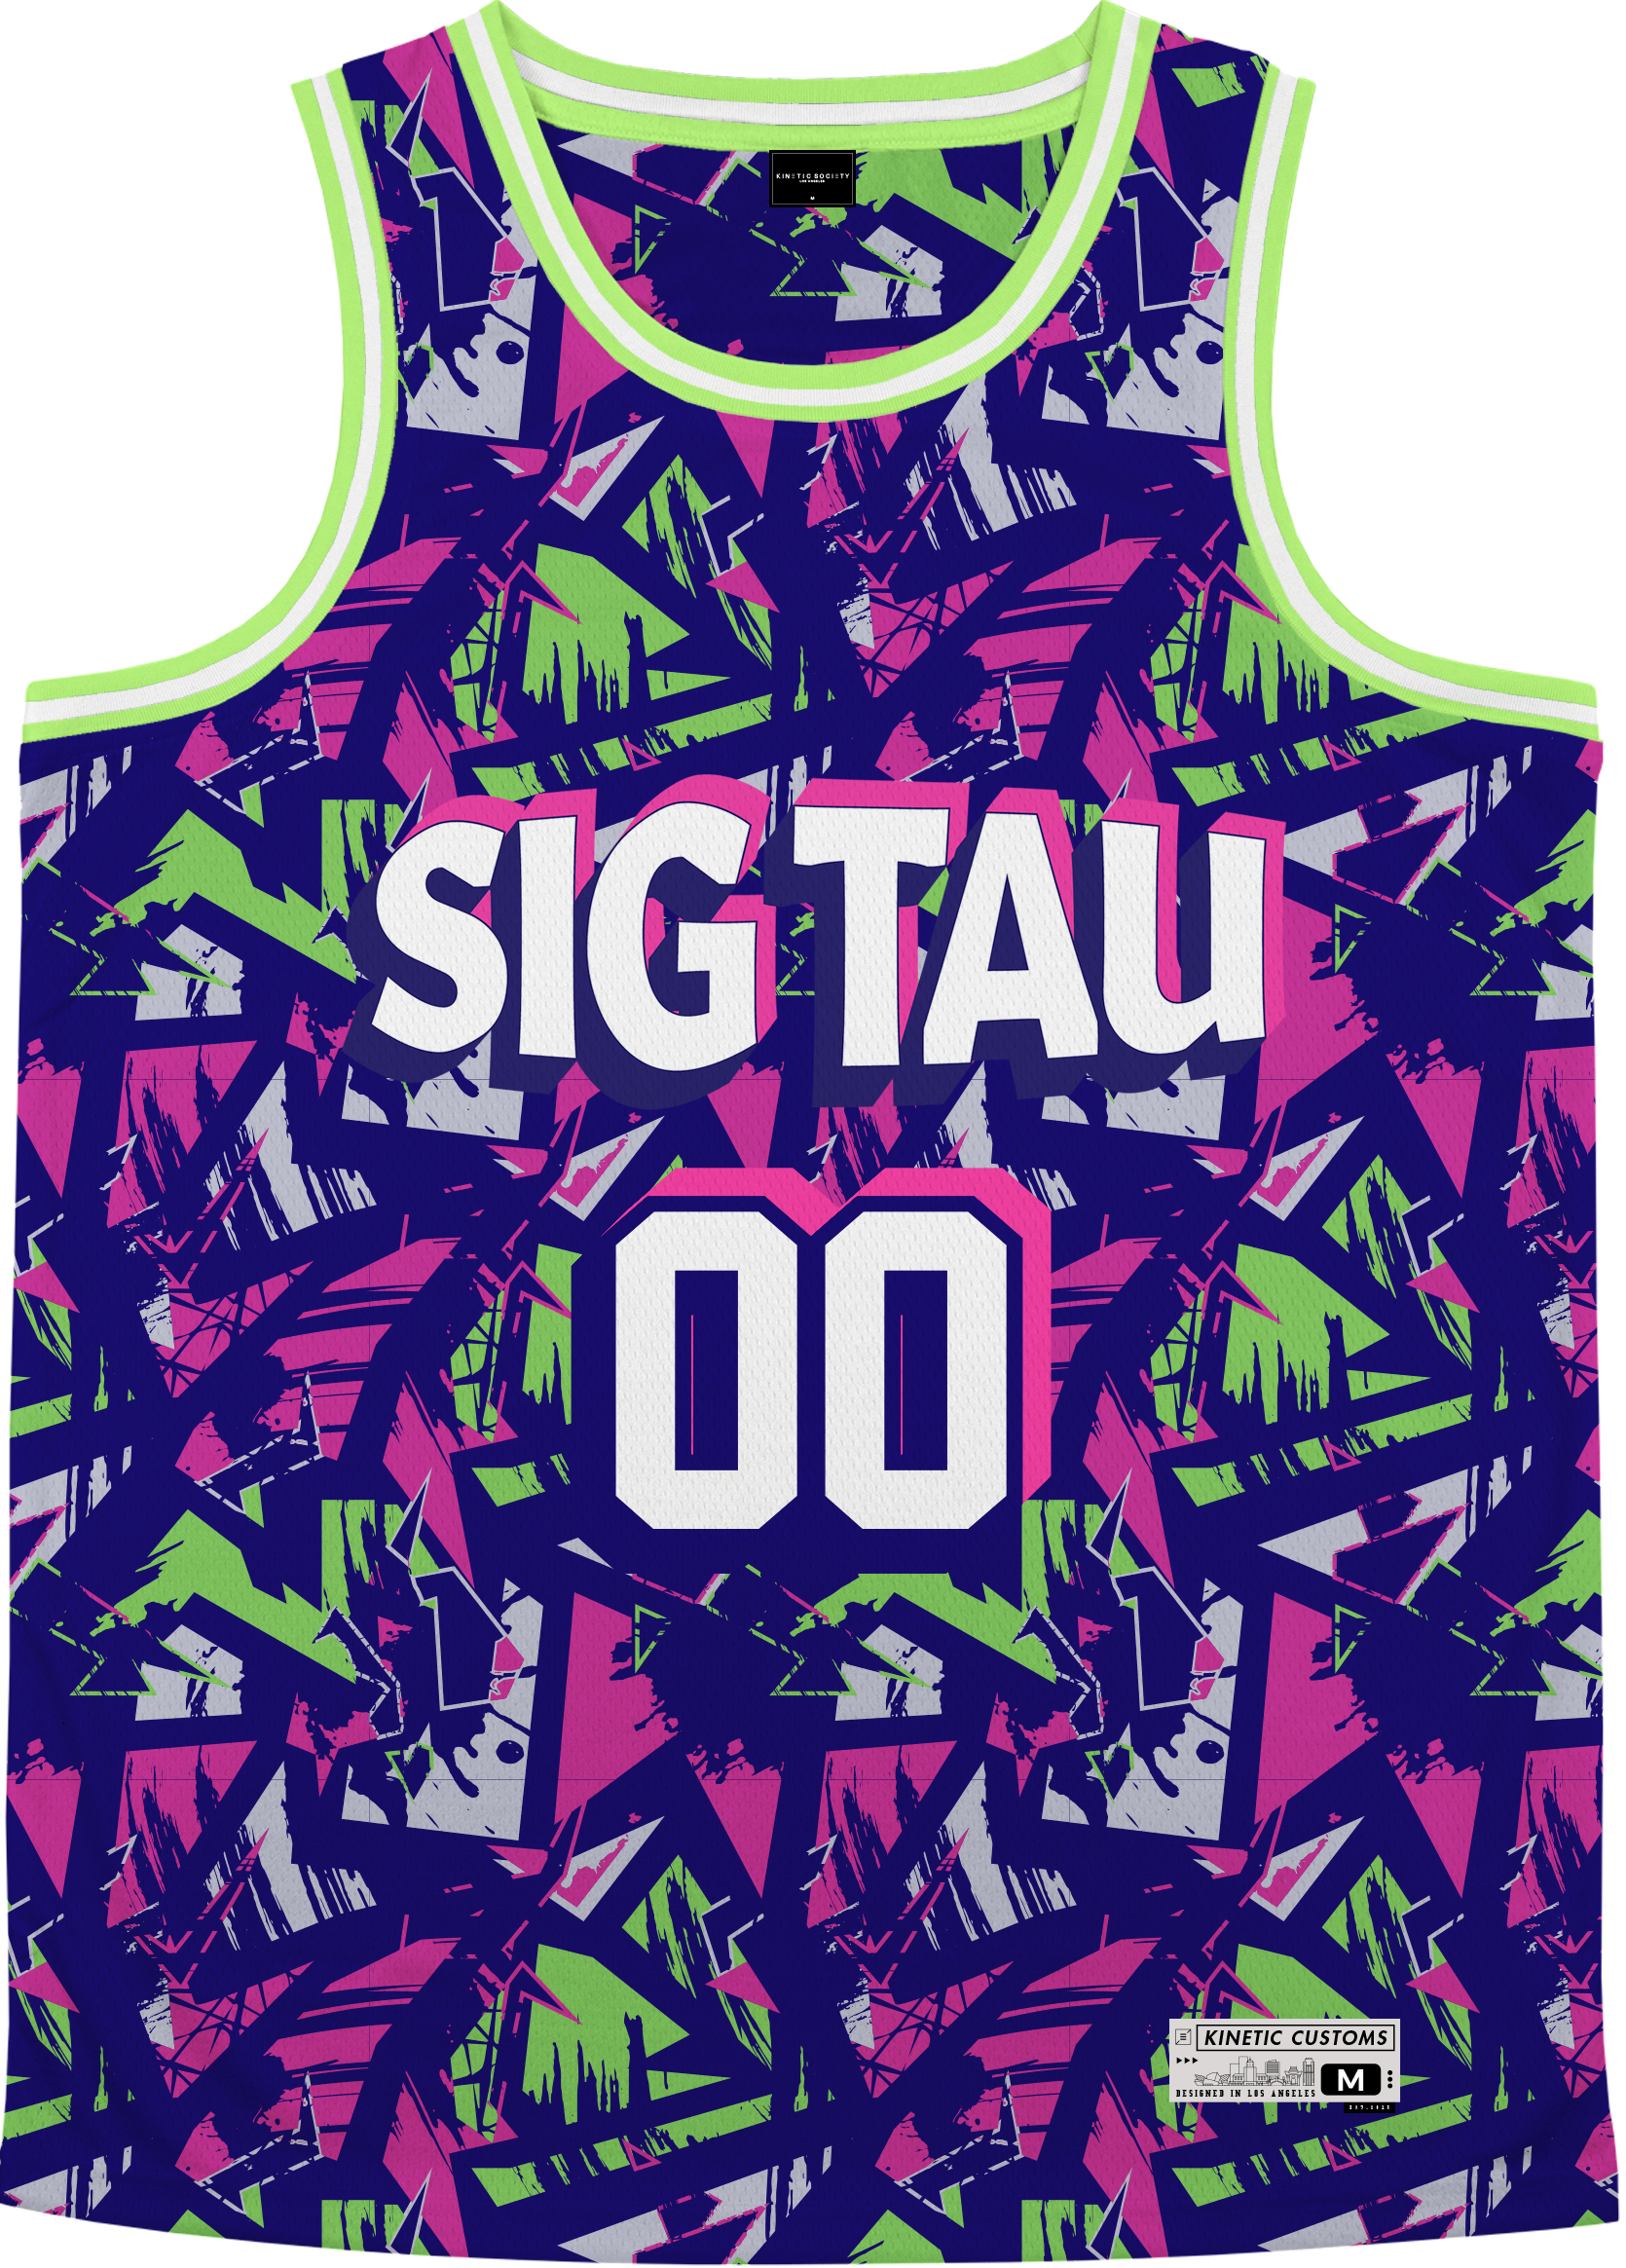 SIGMA TAU GAMMA - Purple Shrouds Basketball Jersey